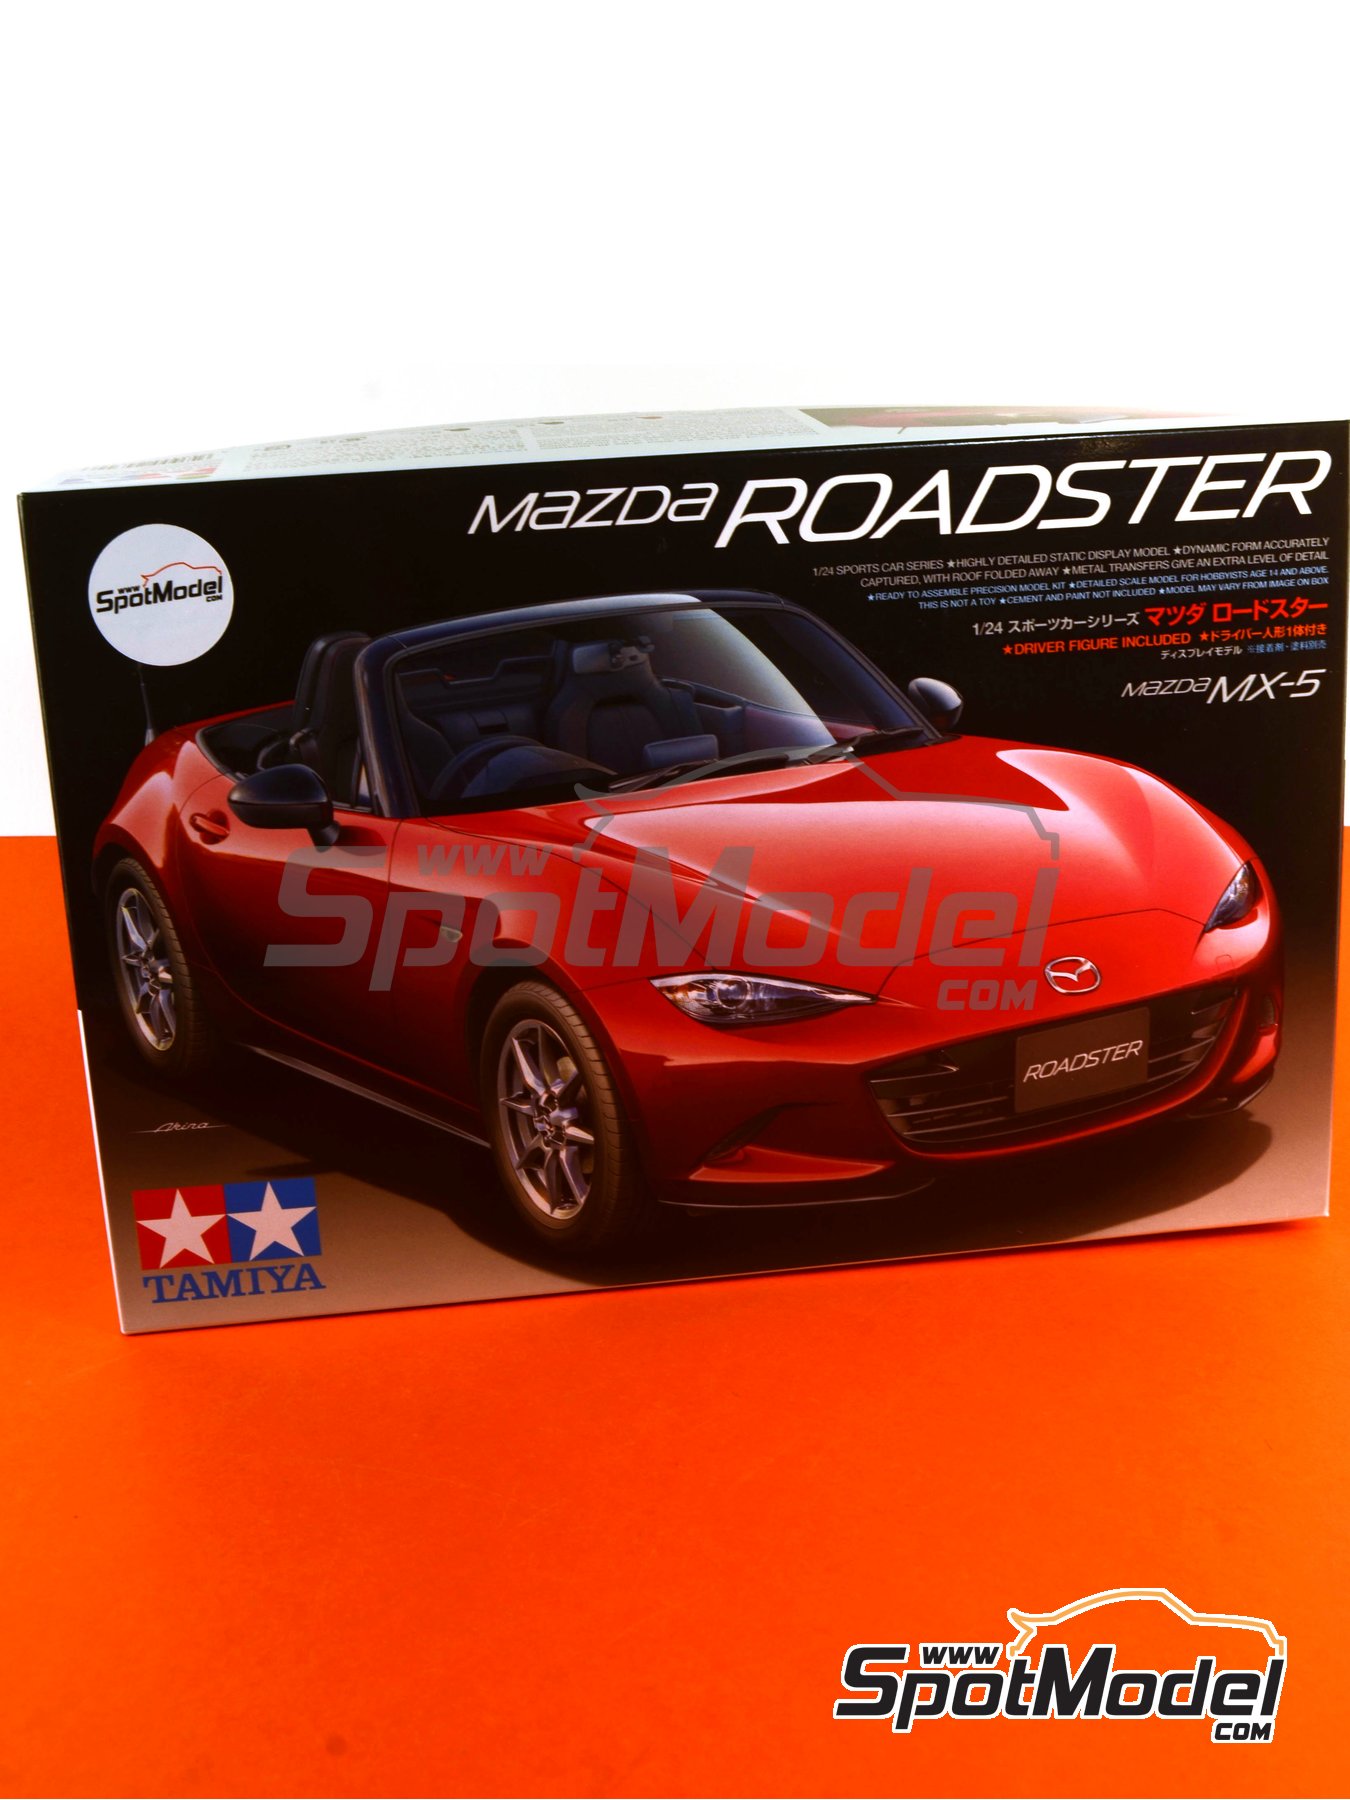 New NOS Sealed Revell Mazda MX-5 Miata 1:24 Scale Model Car Kit Hobby Toy 7351 